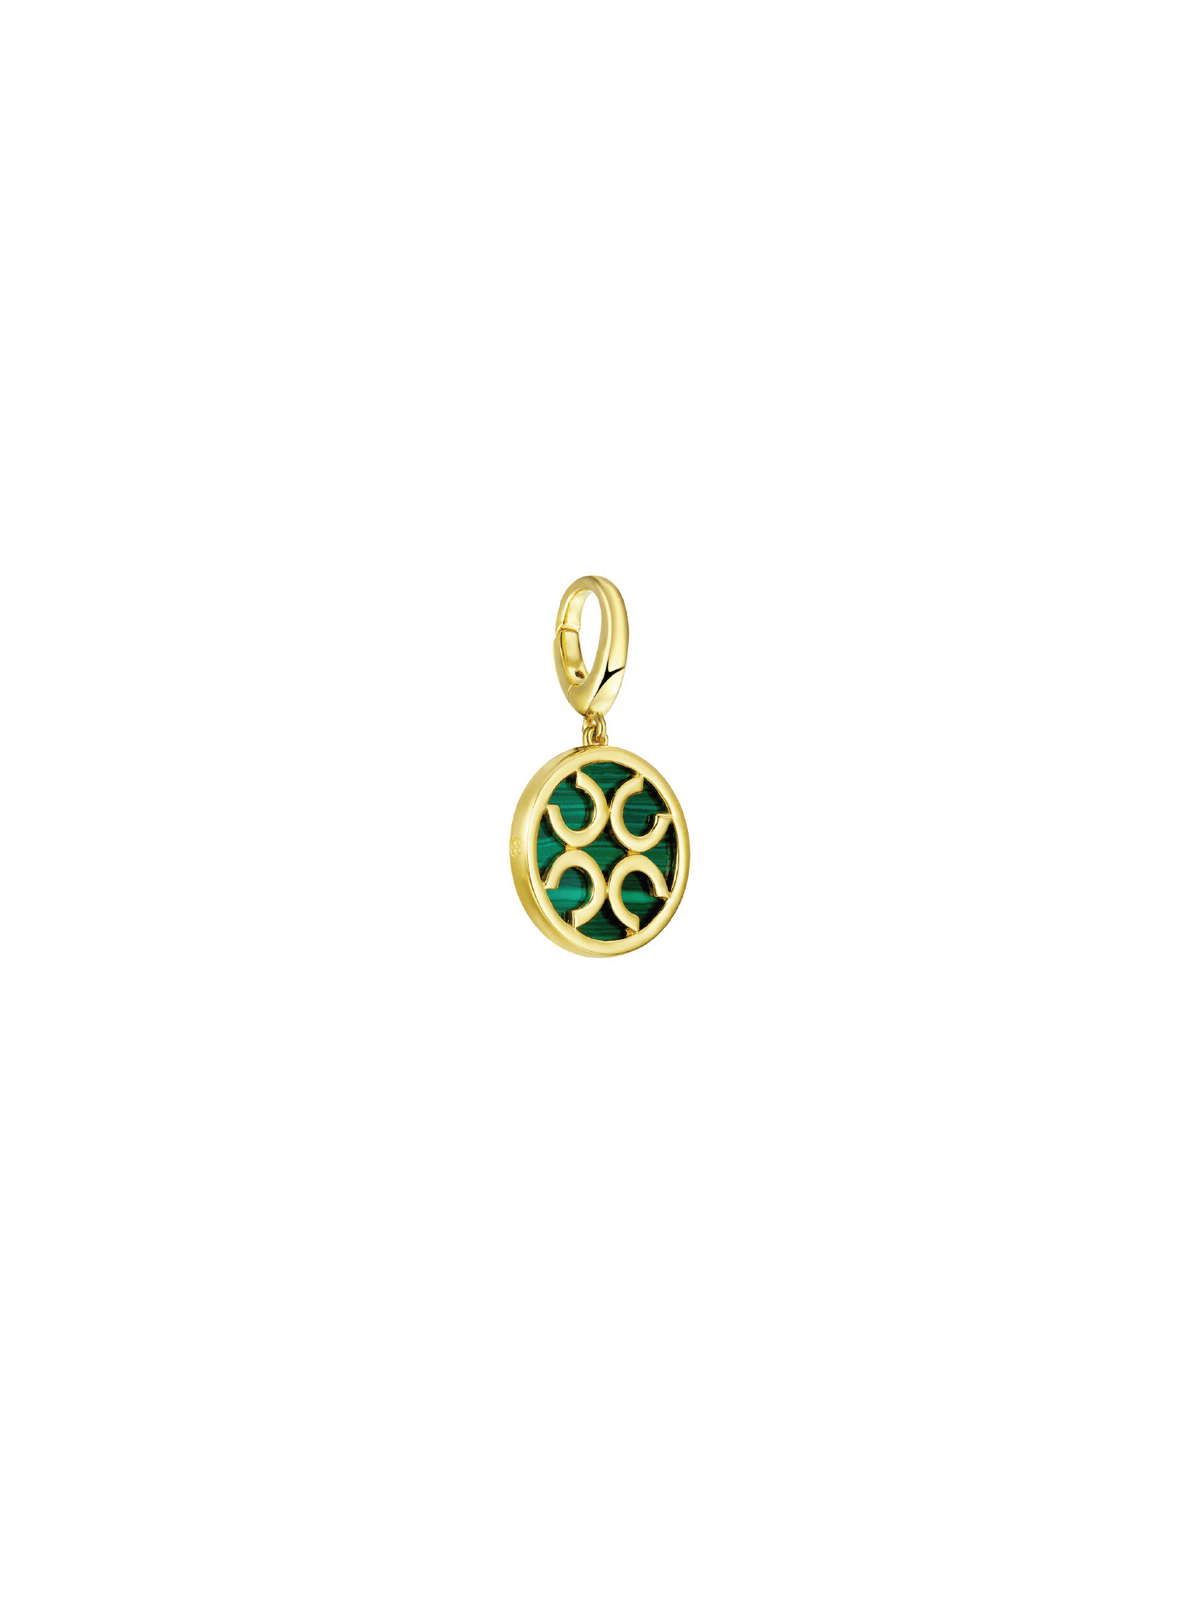 Signature Charm - Emerald